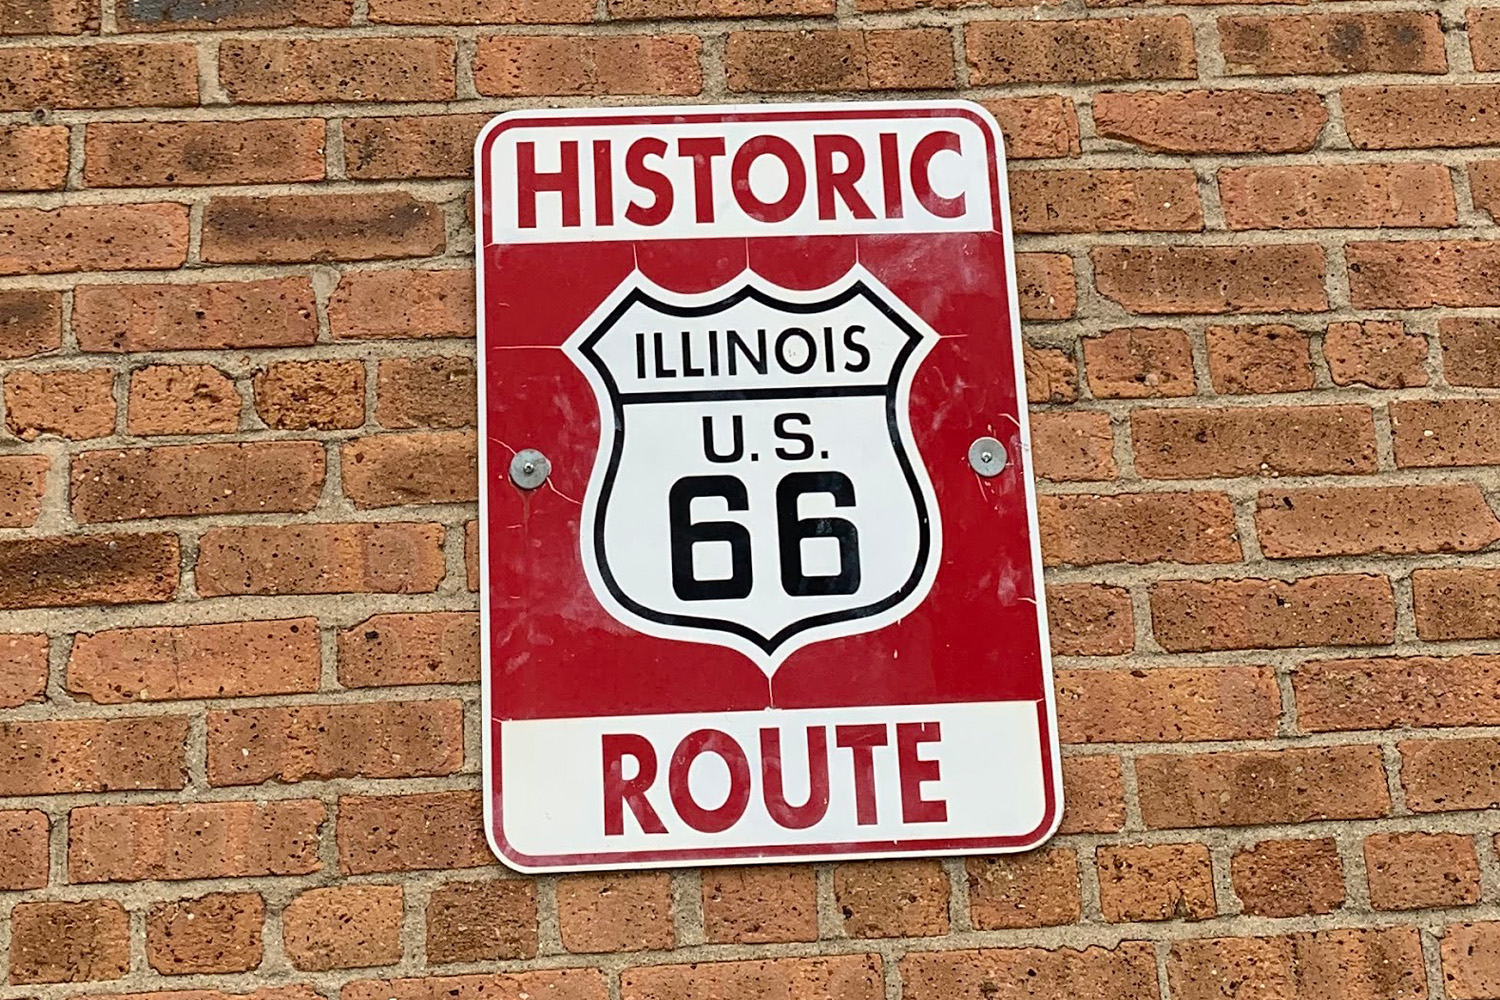 Illinois Route 66 Historic sign